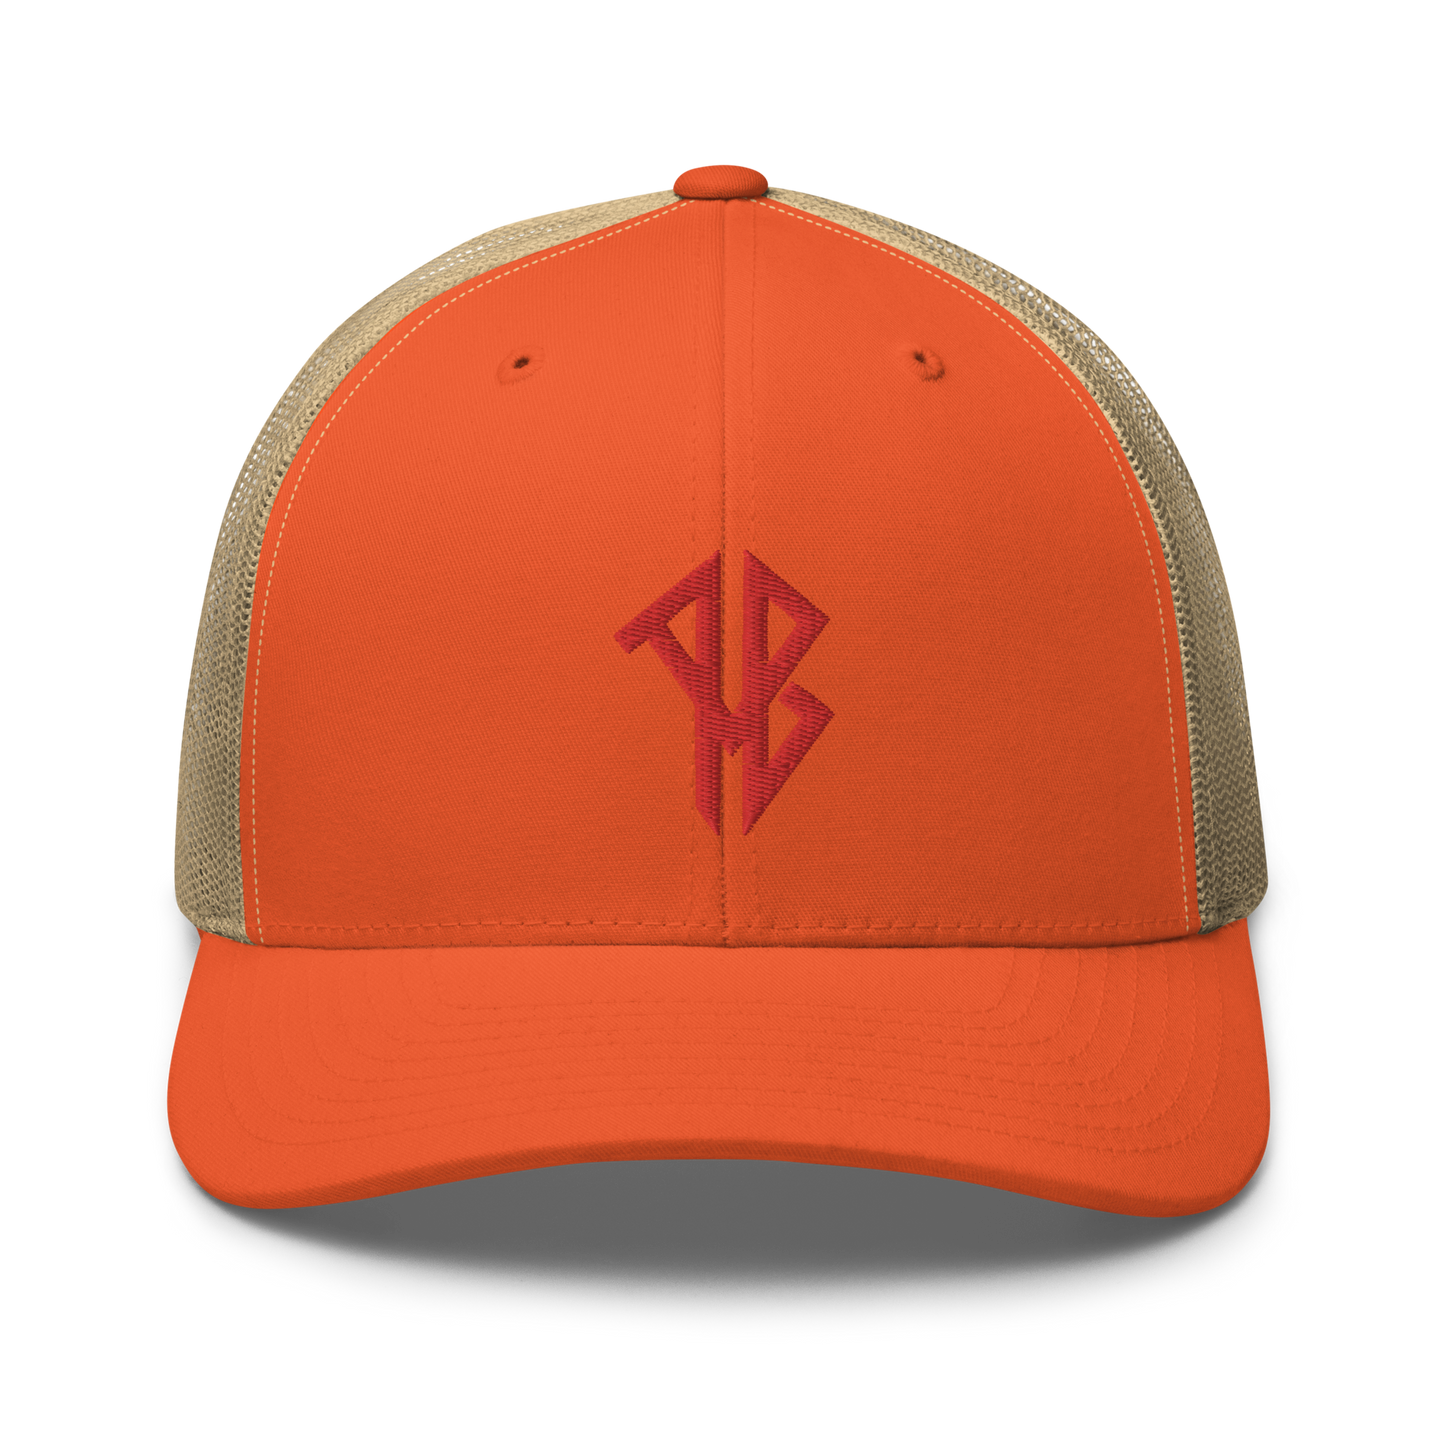 AlphaBroVR AB Logo Retro Trucker Hat